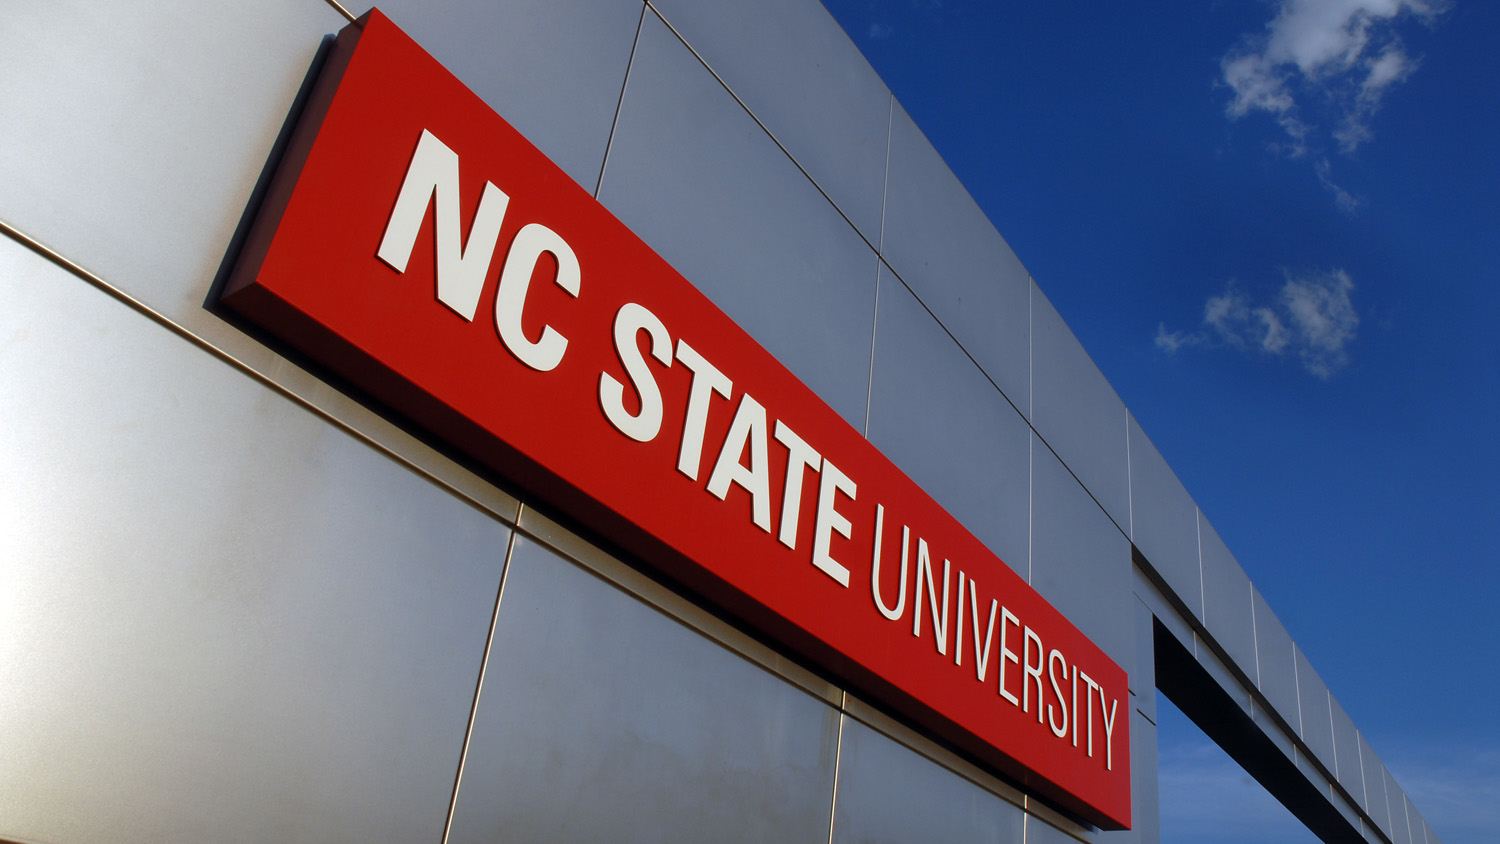 NC State University sign